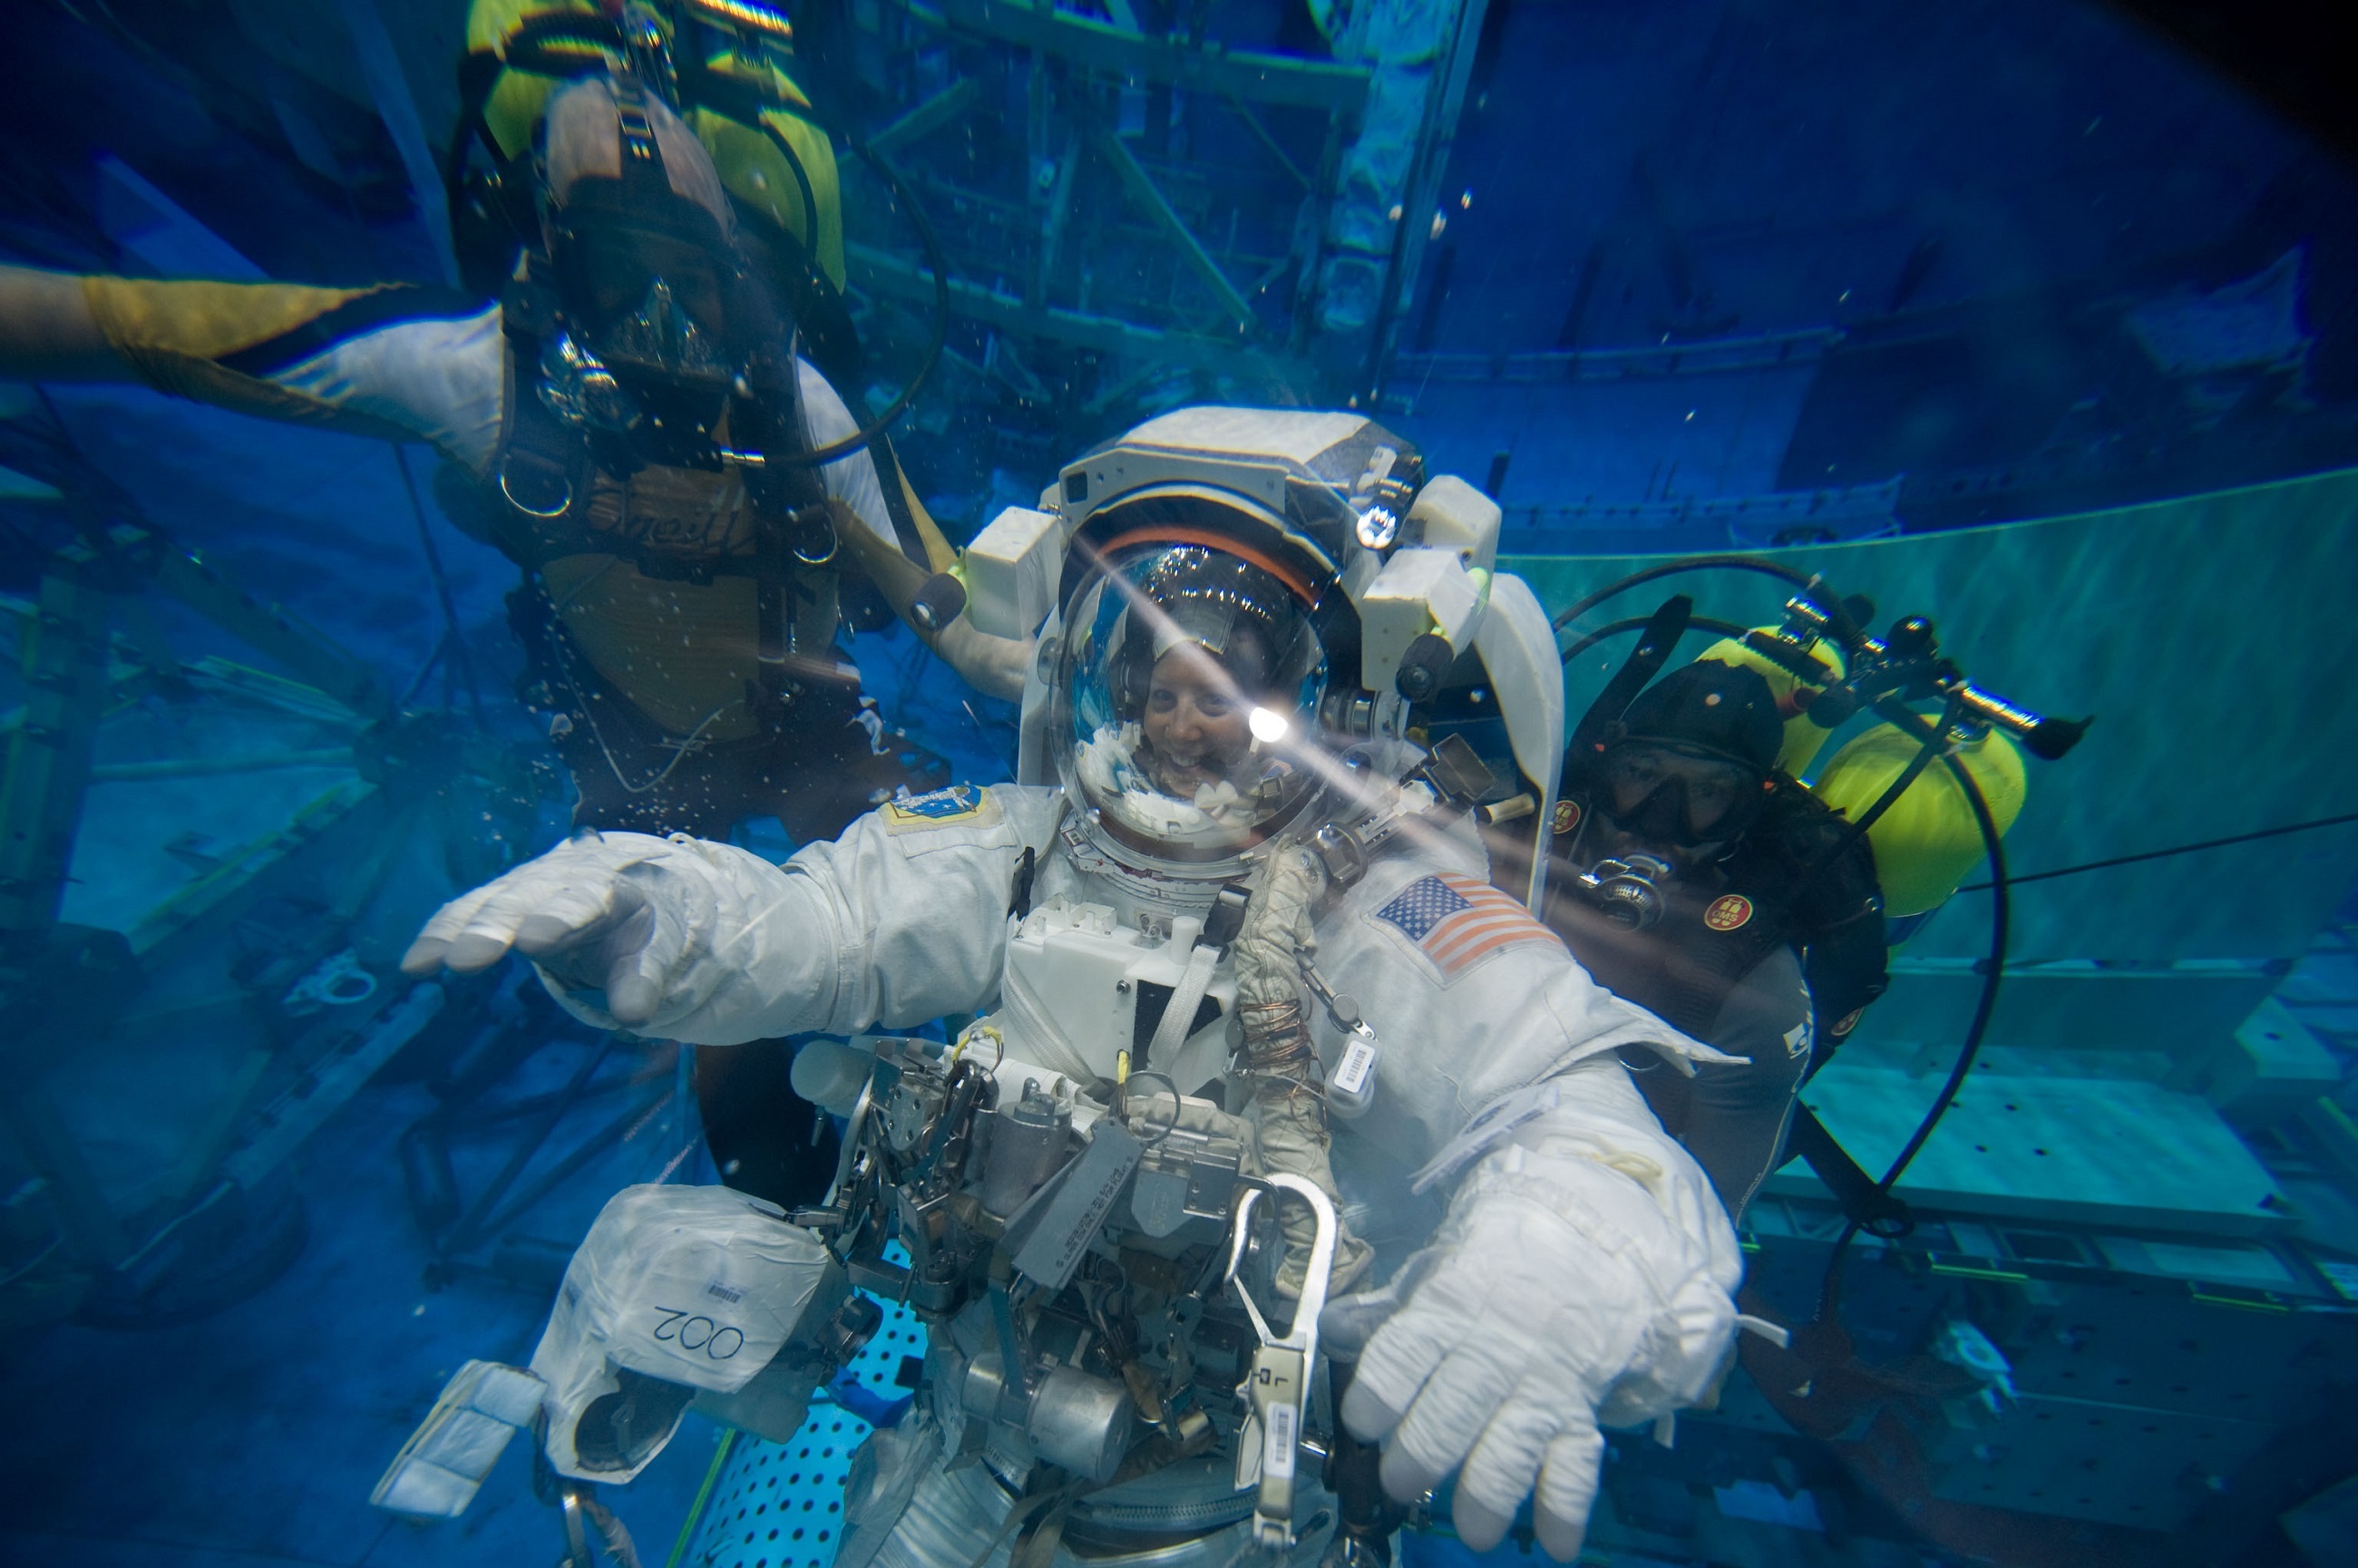 Astronaut training photo